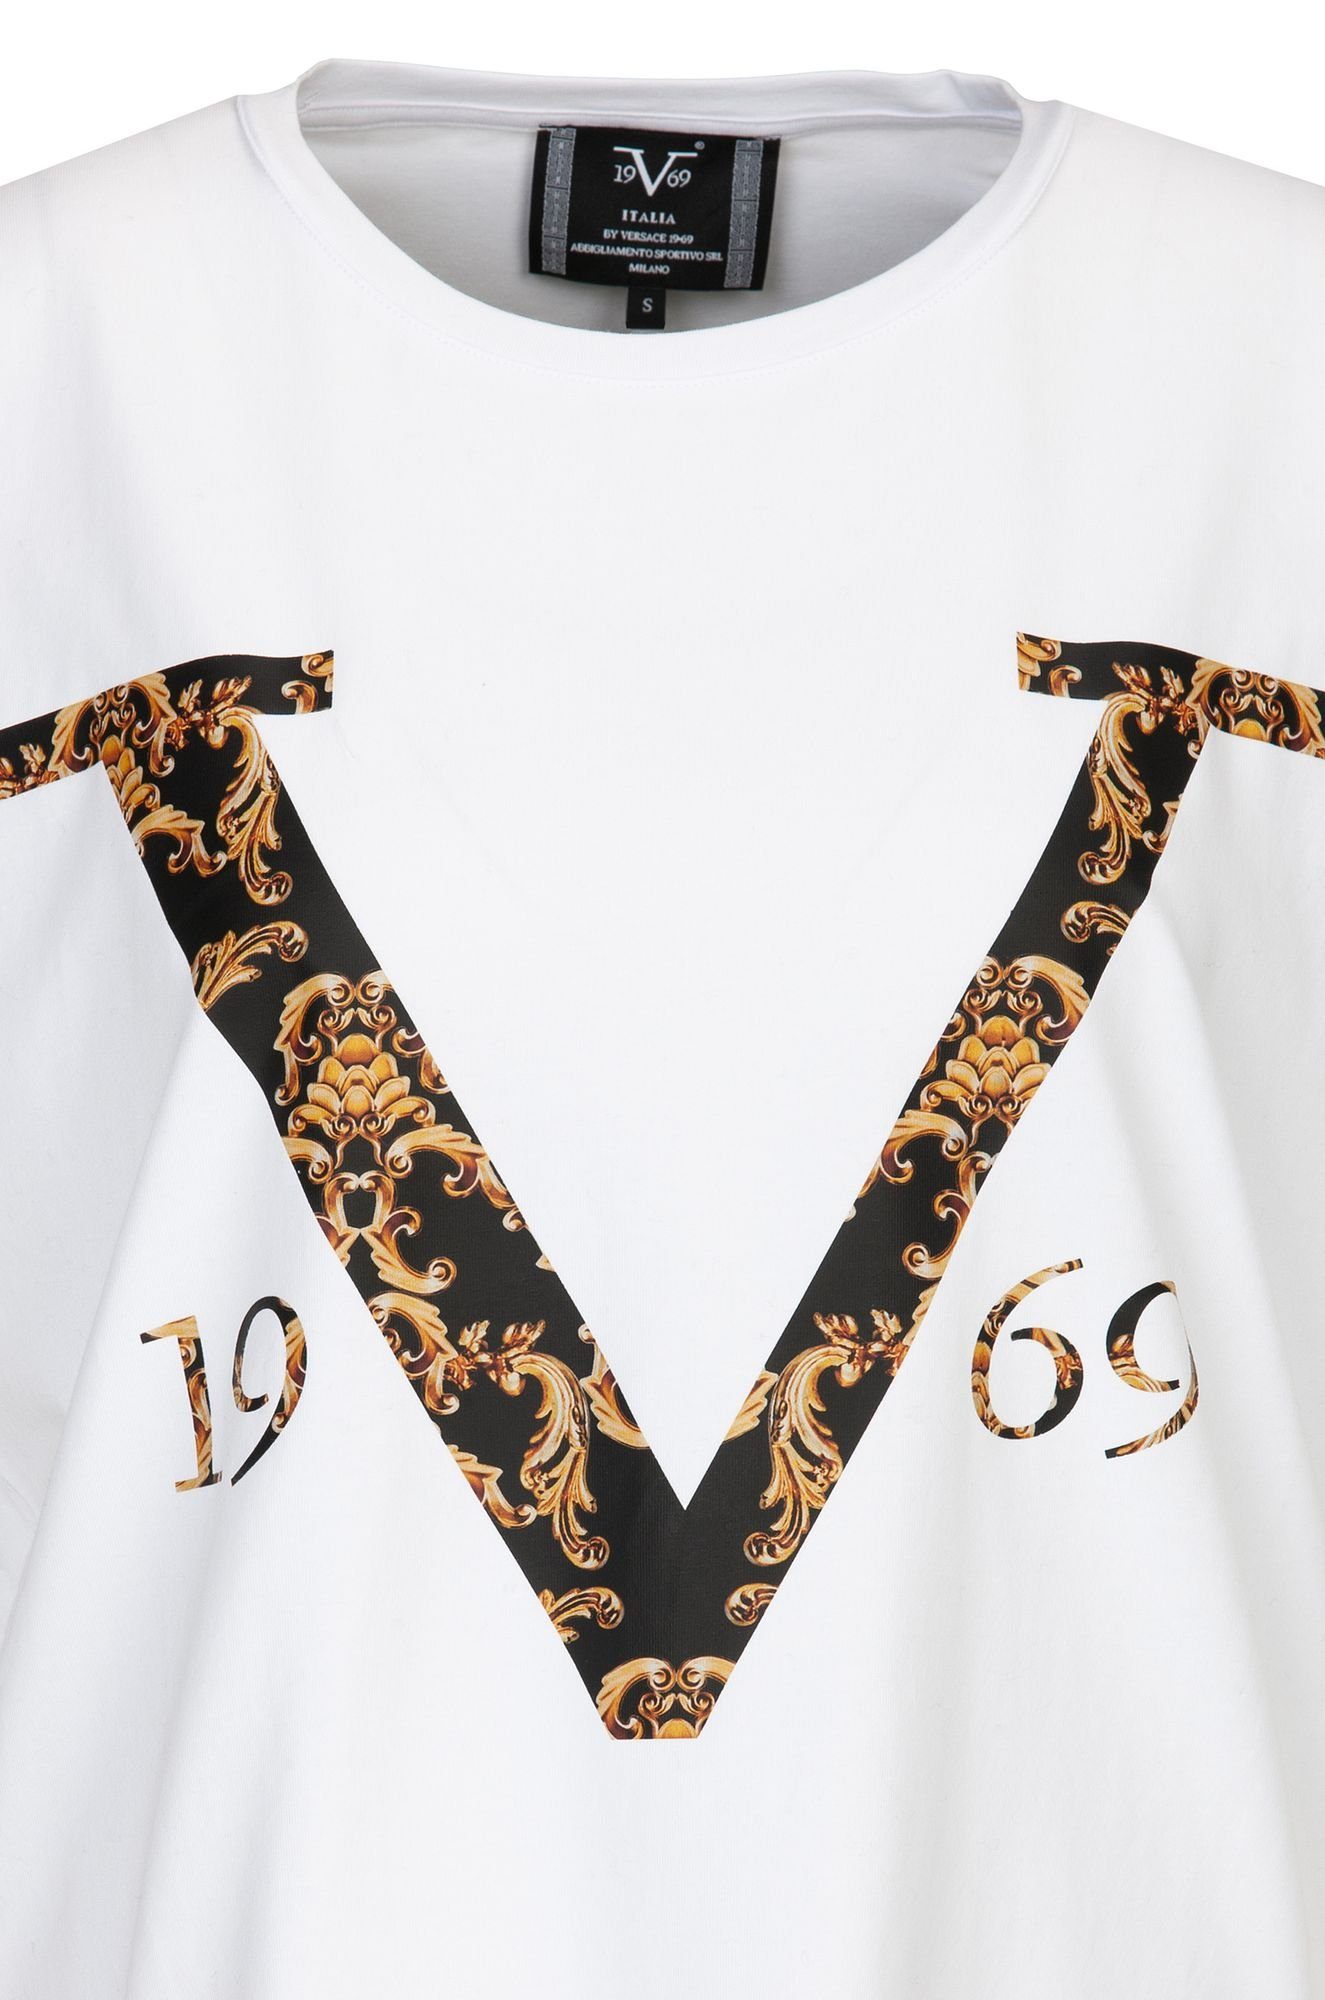 19V69 Italia by Versace T-Shirt Sportivo by - SRL WHITE Josephine Versace